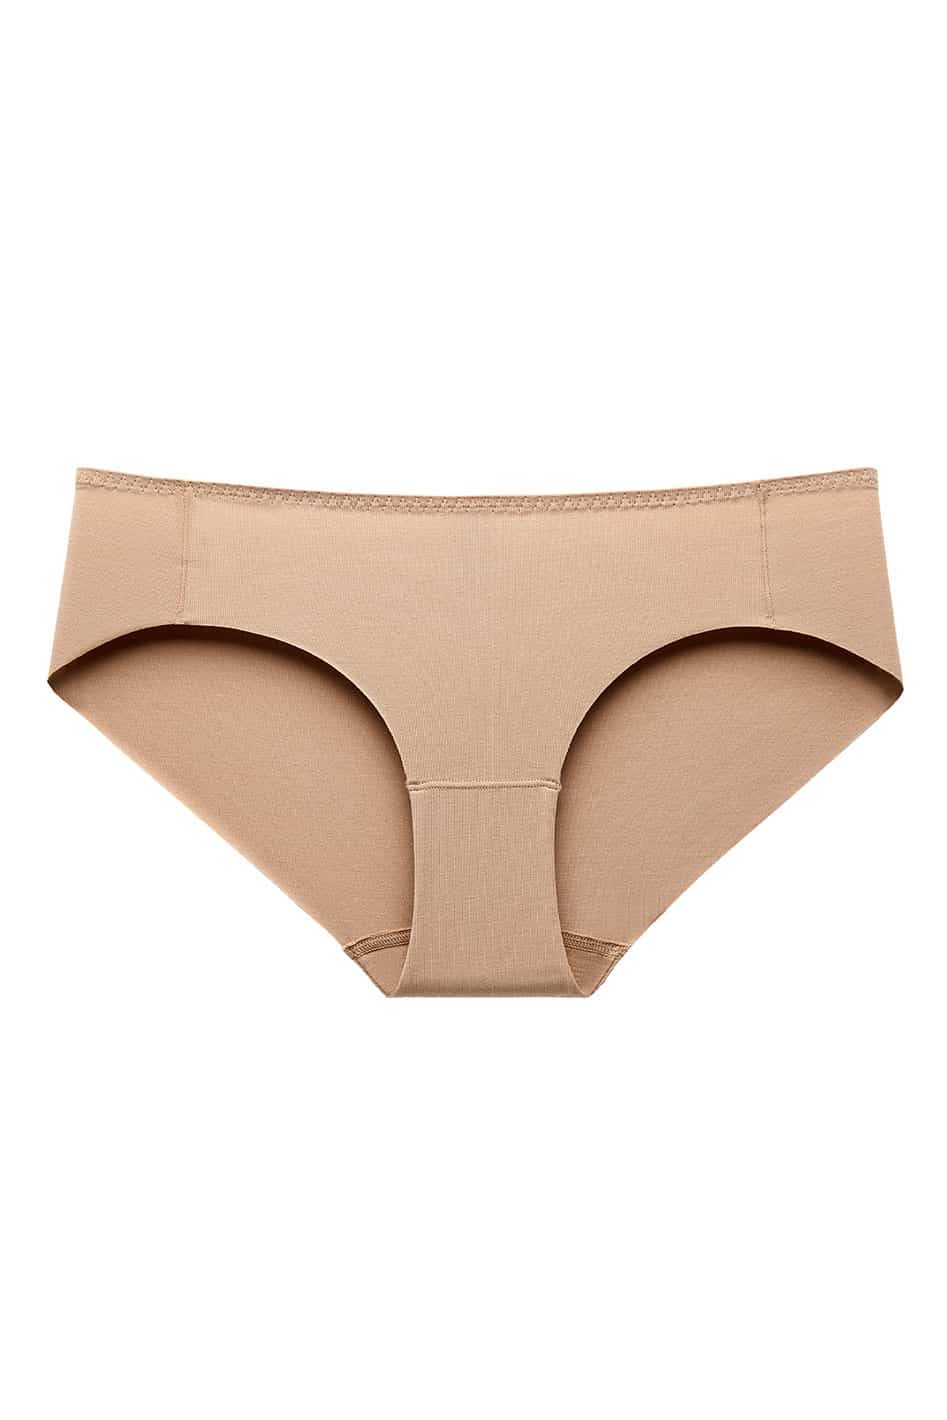 Satin contour seamless shorty [Blush & Saffron] – The Pantry Underwear